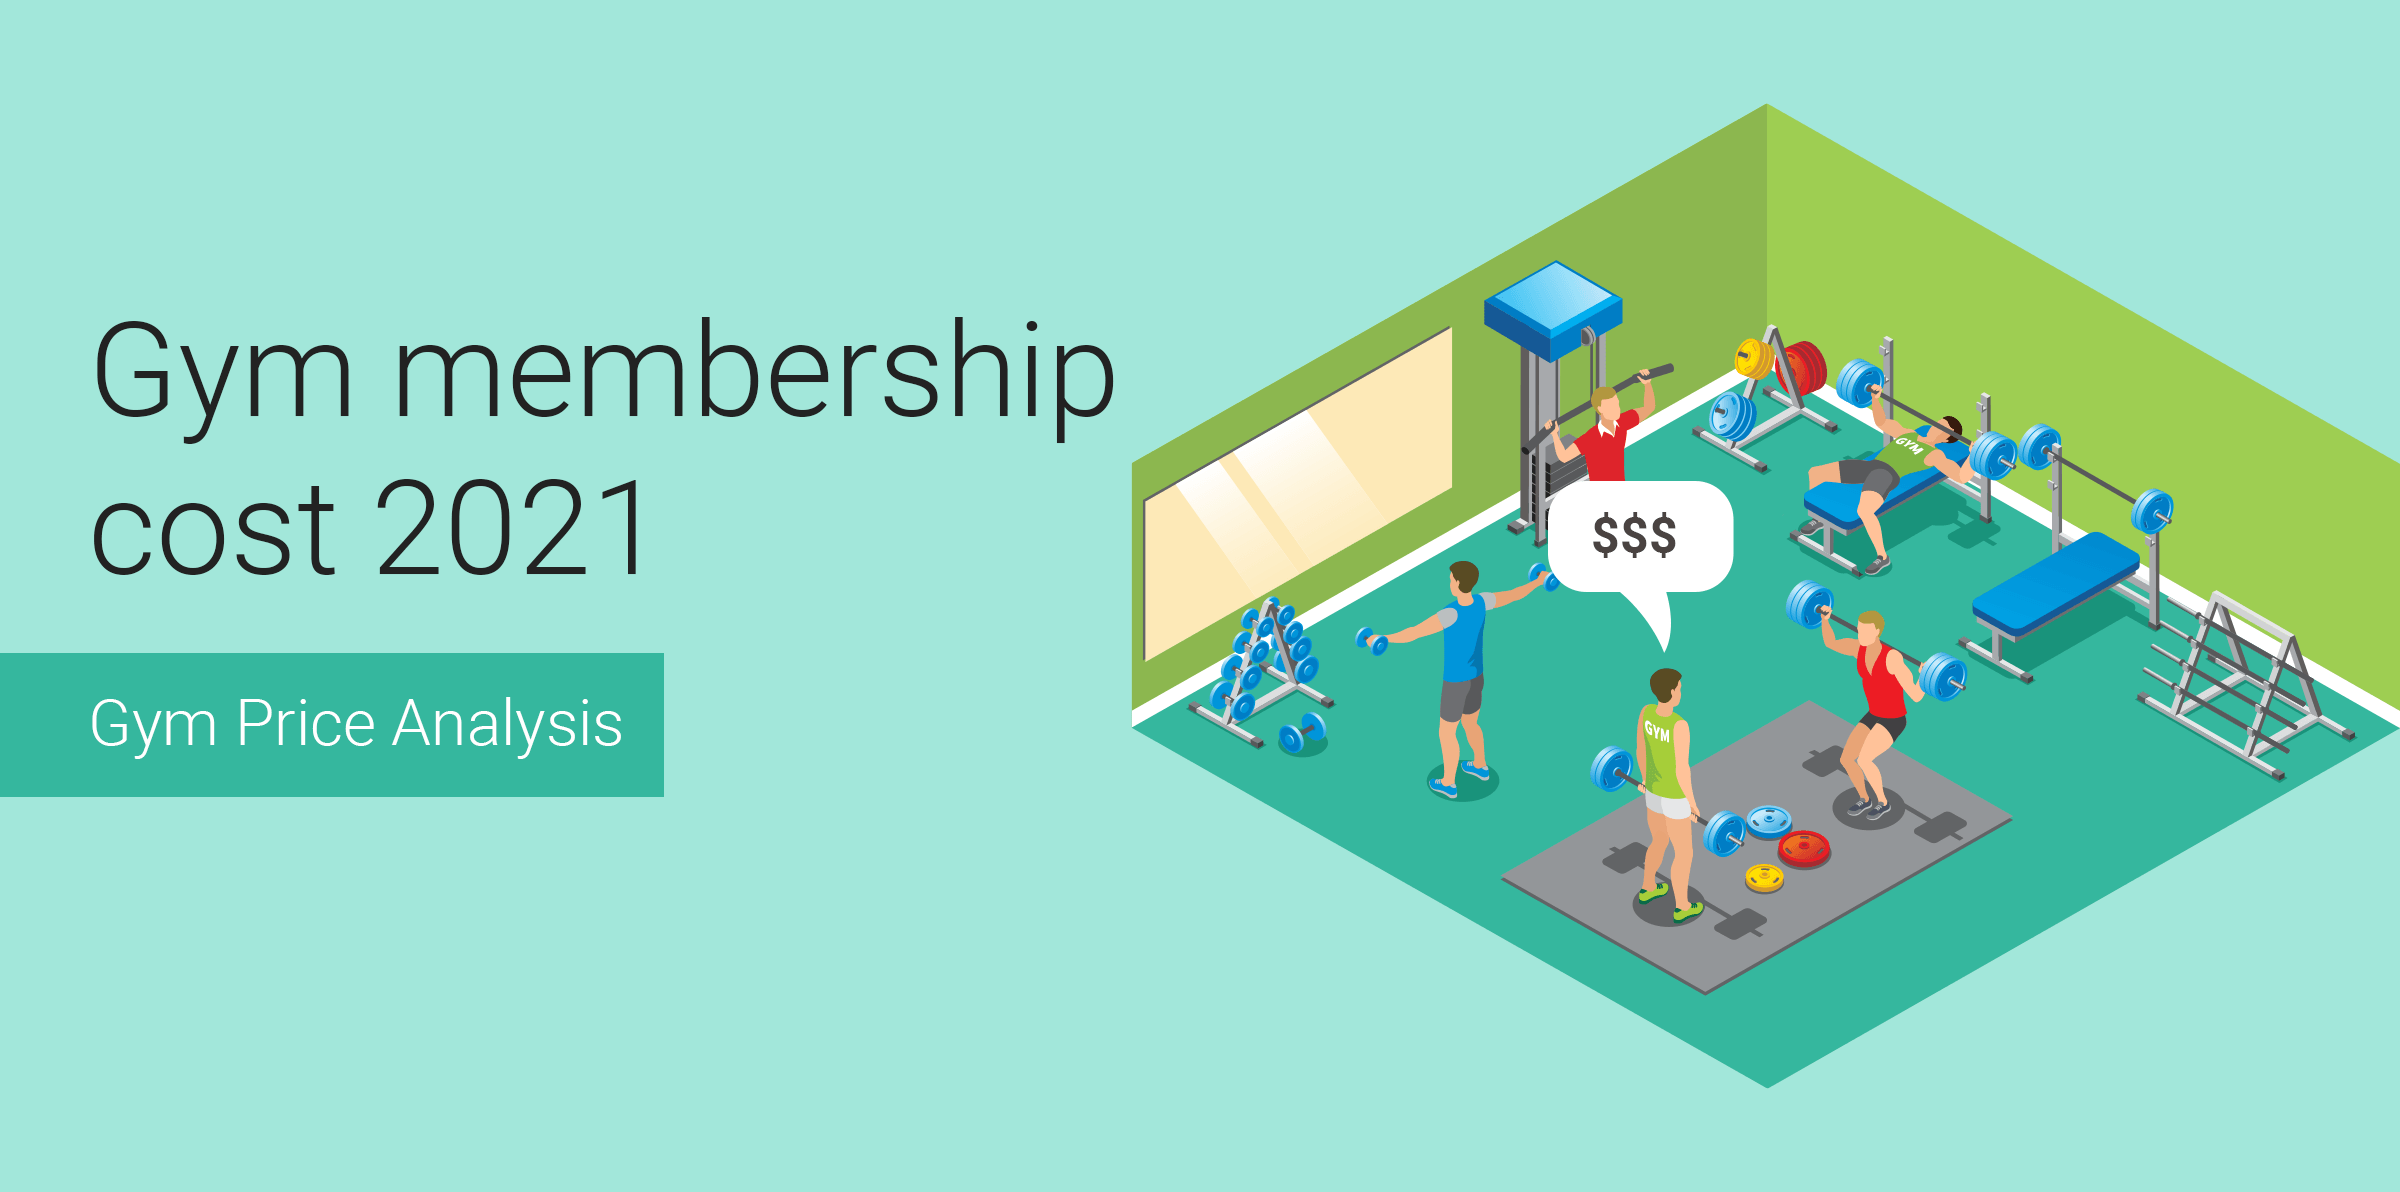 crunch membership costs